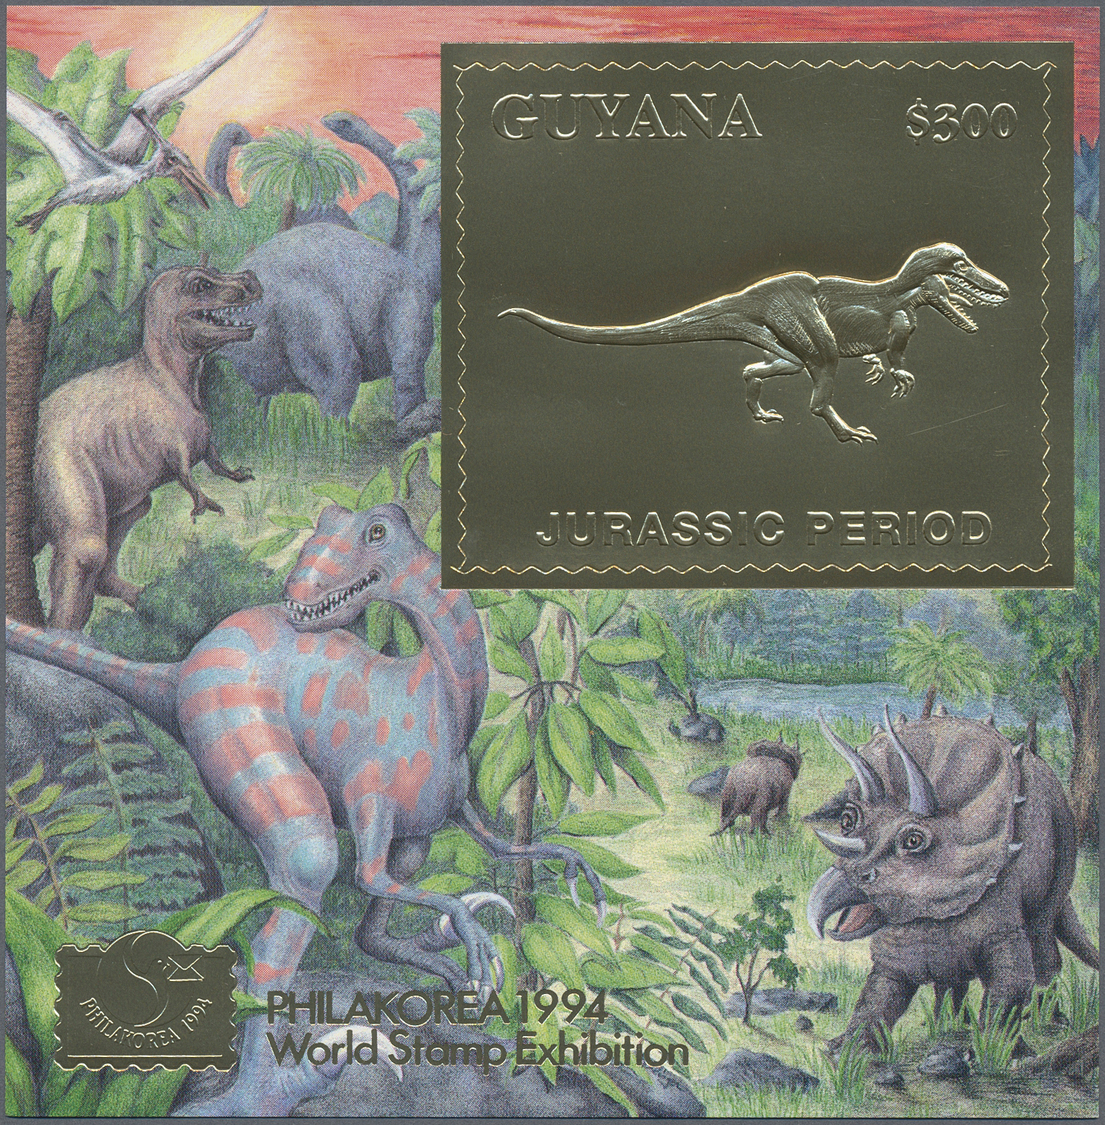 ** Thematik: Tiere-Dinosaurier / animals-dinosaur: 1994, International Stamp Exhibition Philakorea '94 GOLD and SILVER m